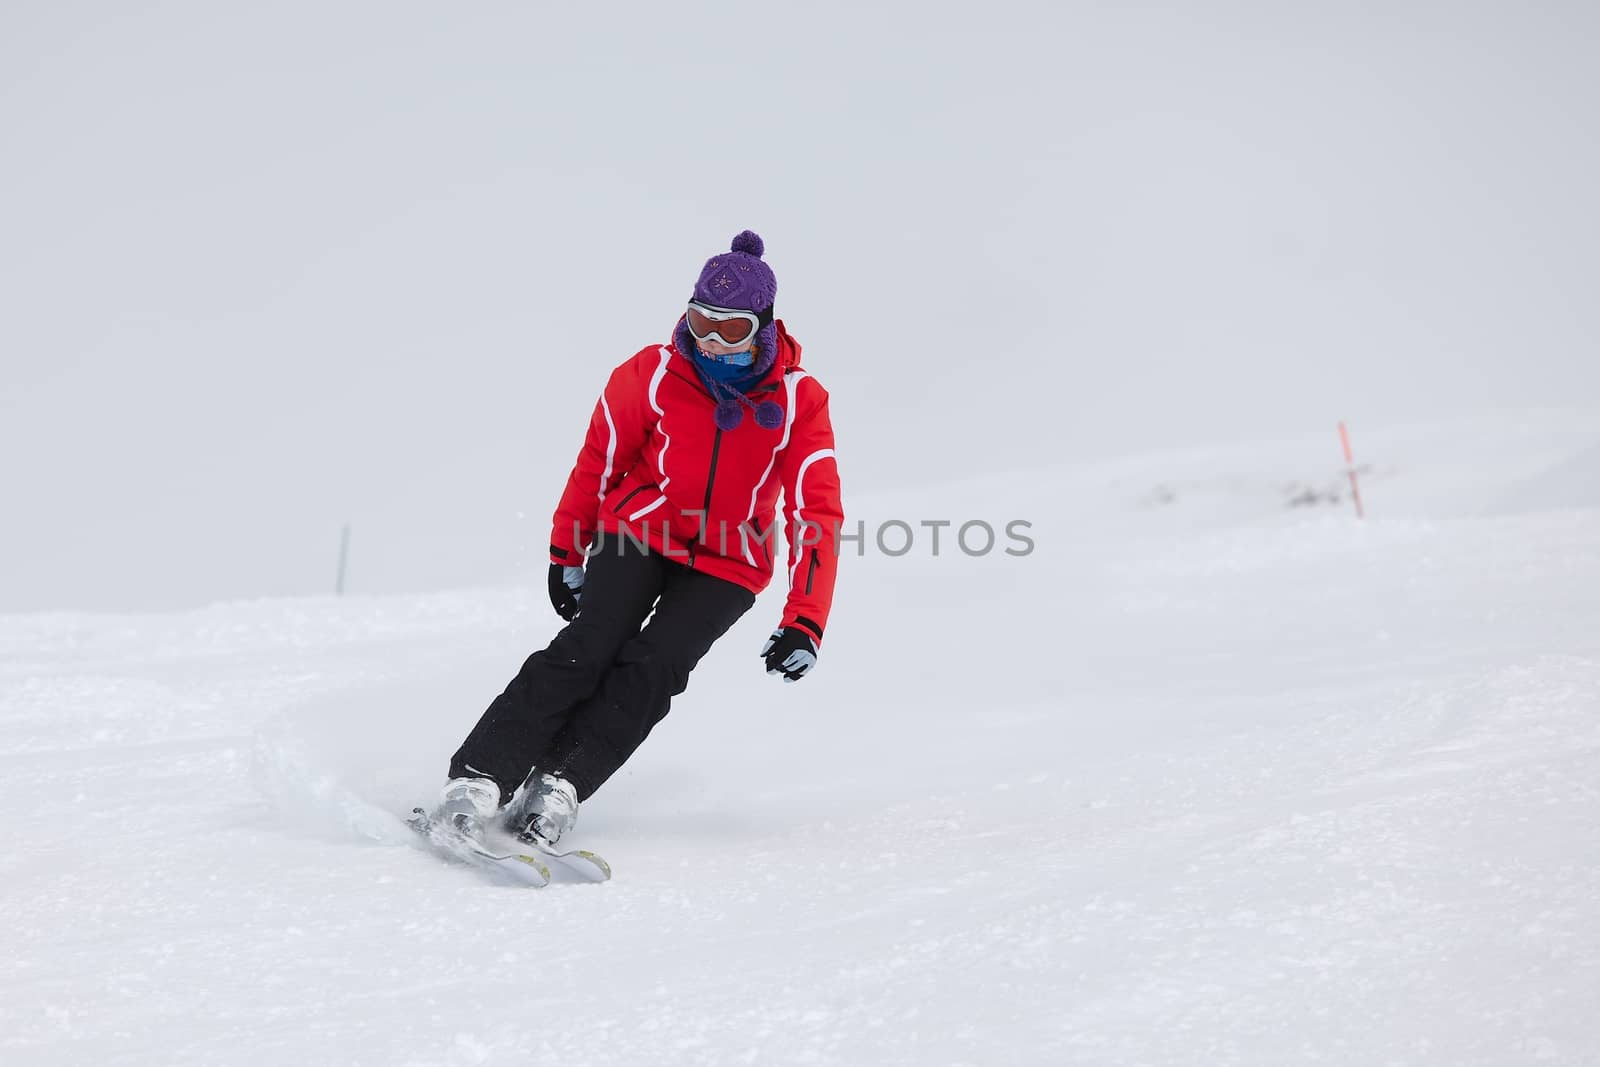 Skiing by Gudella